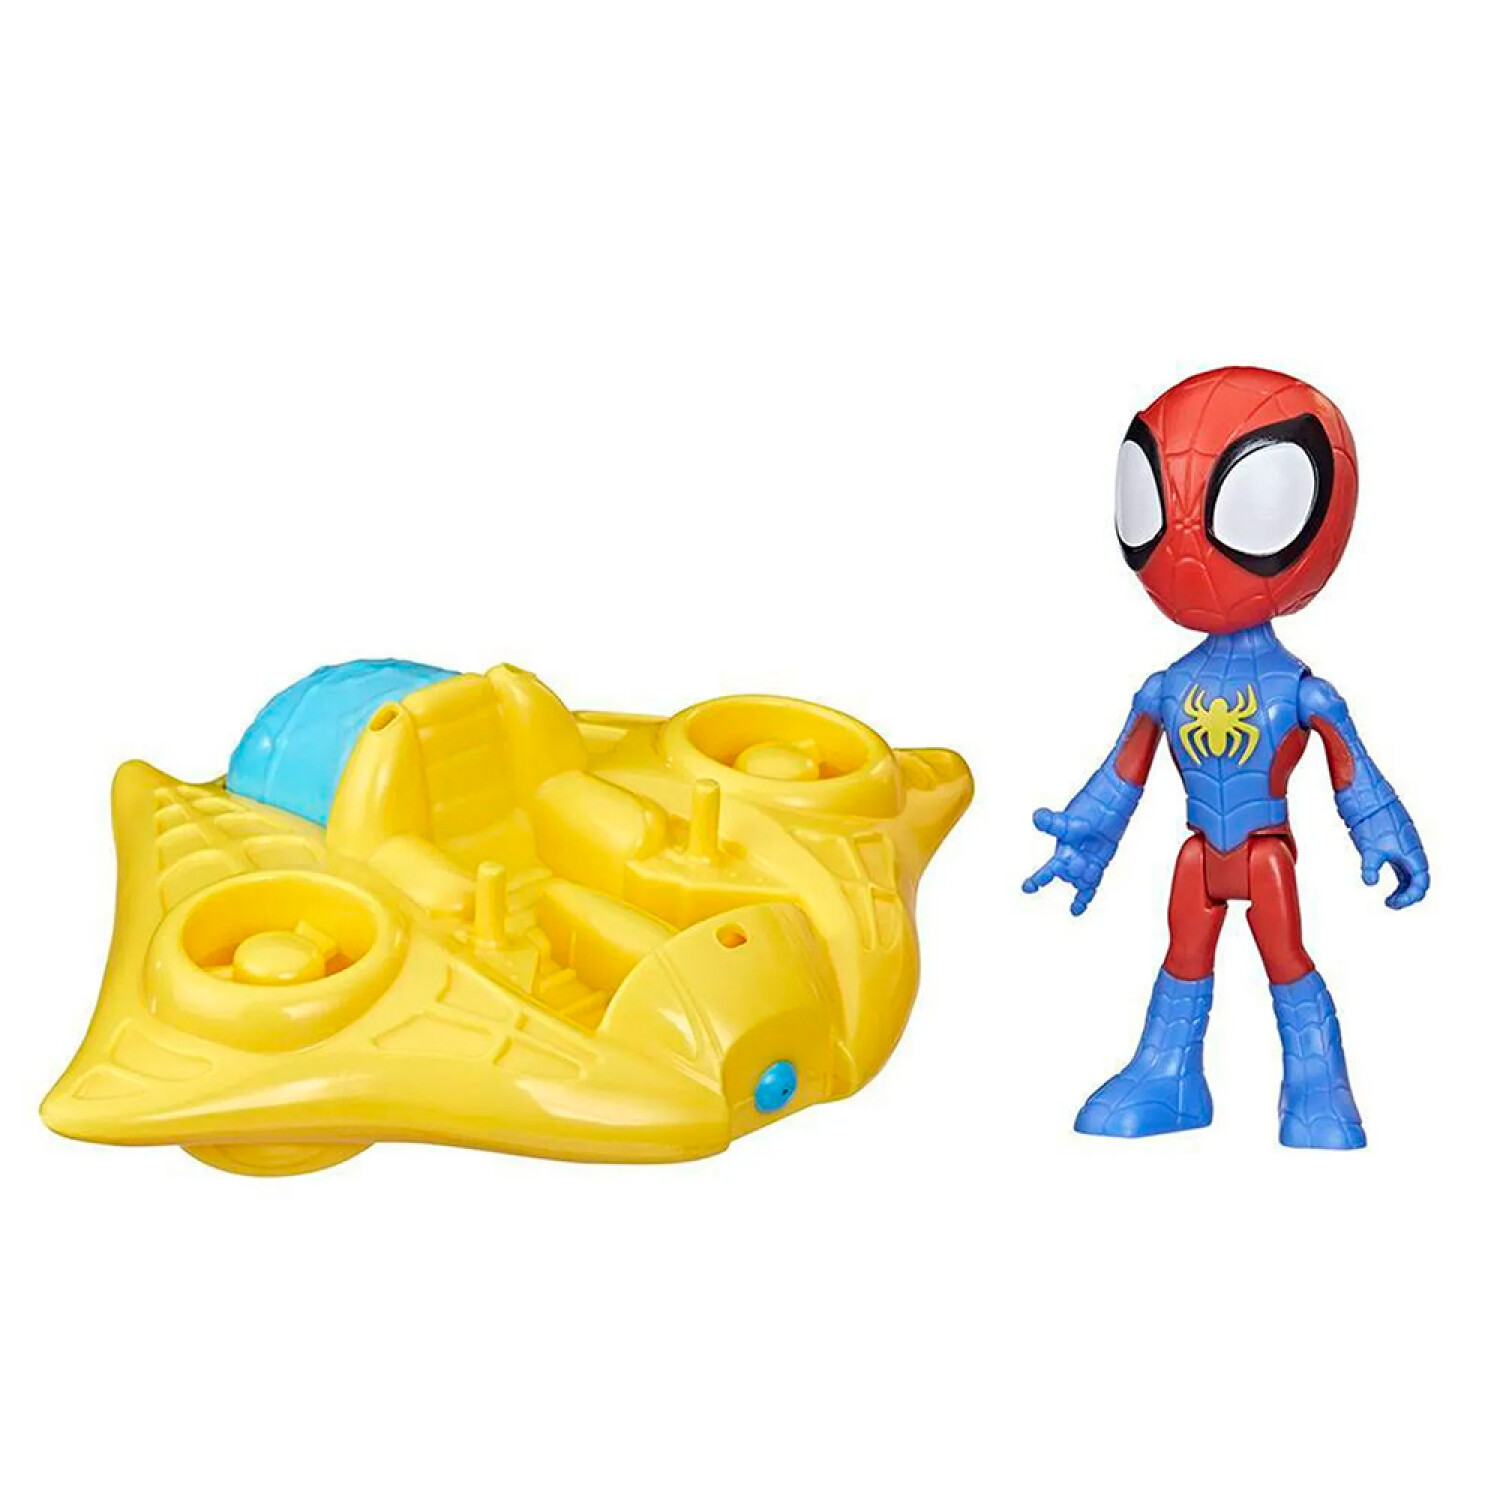 Muñeco Spiderman 55cm superhéroe linea revolution - 001 — Universo Binario